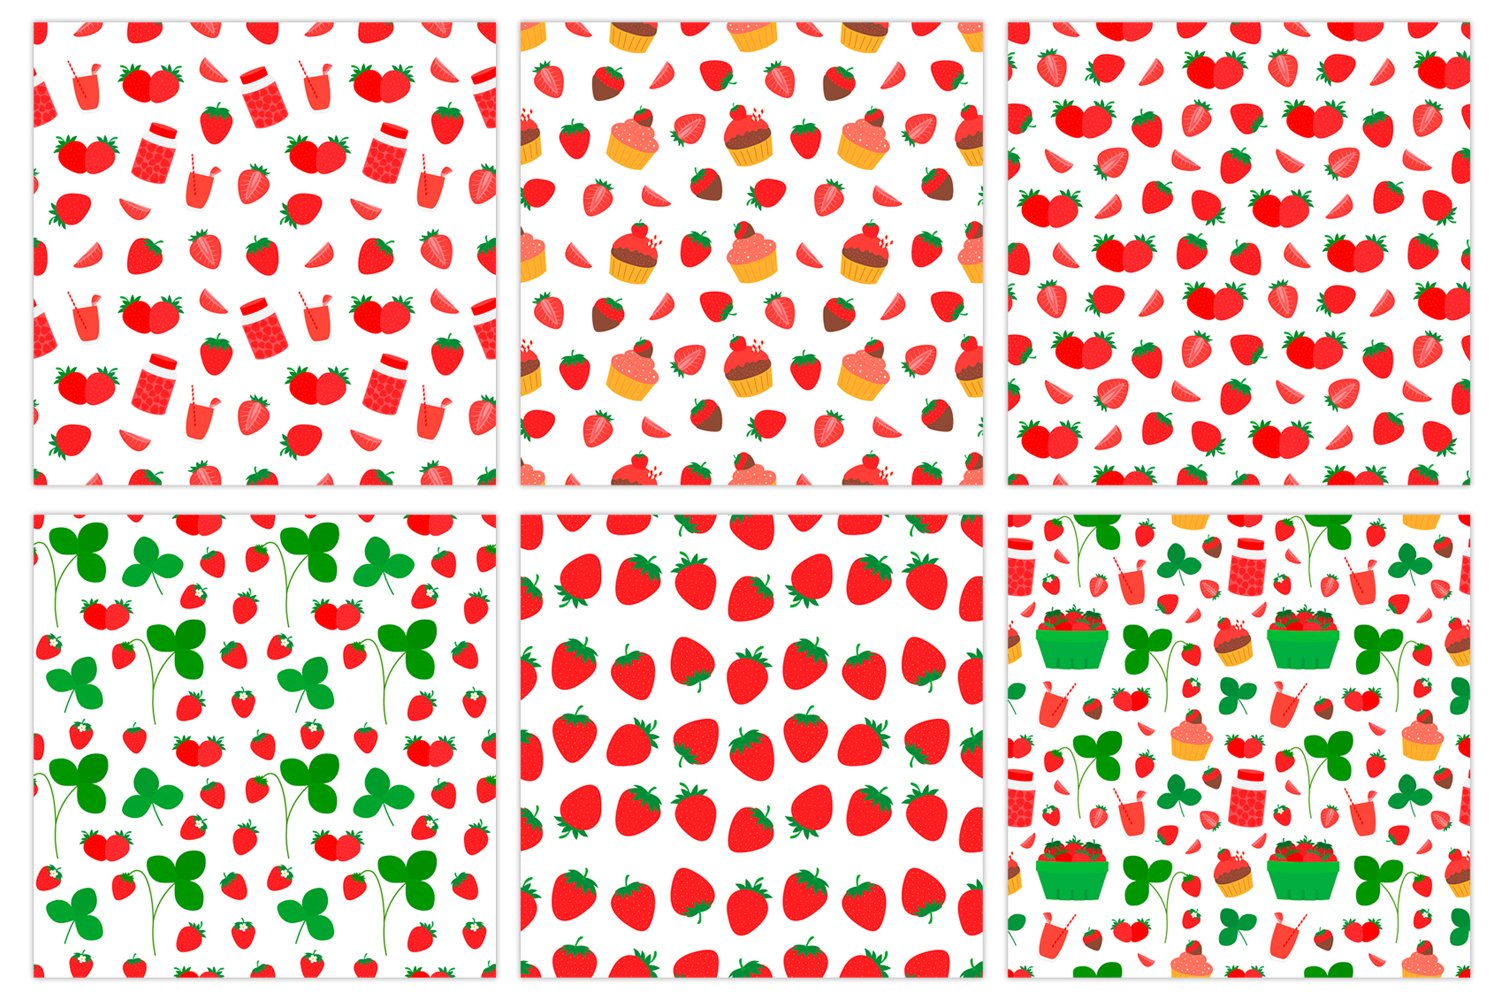 Big diversity of strawberries patterns.